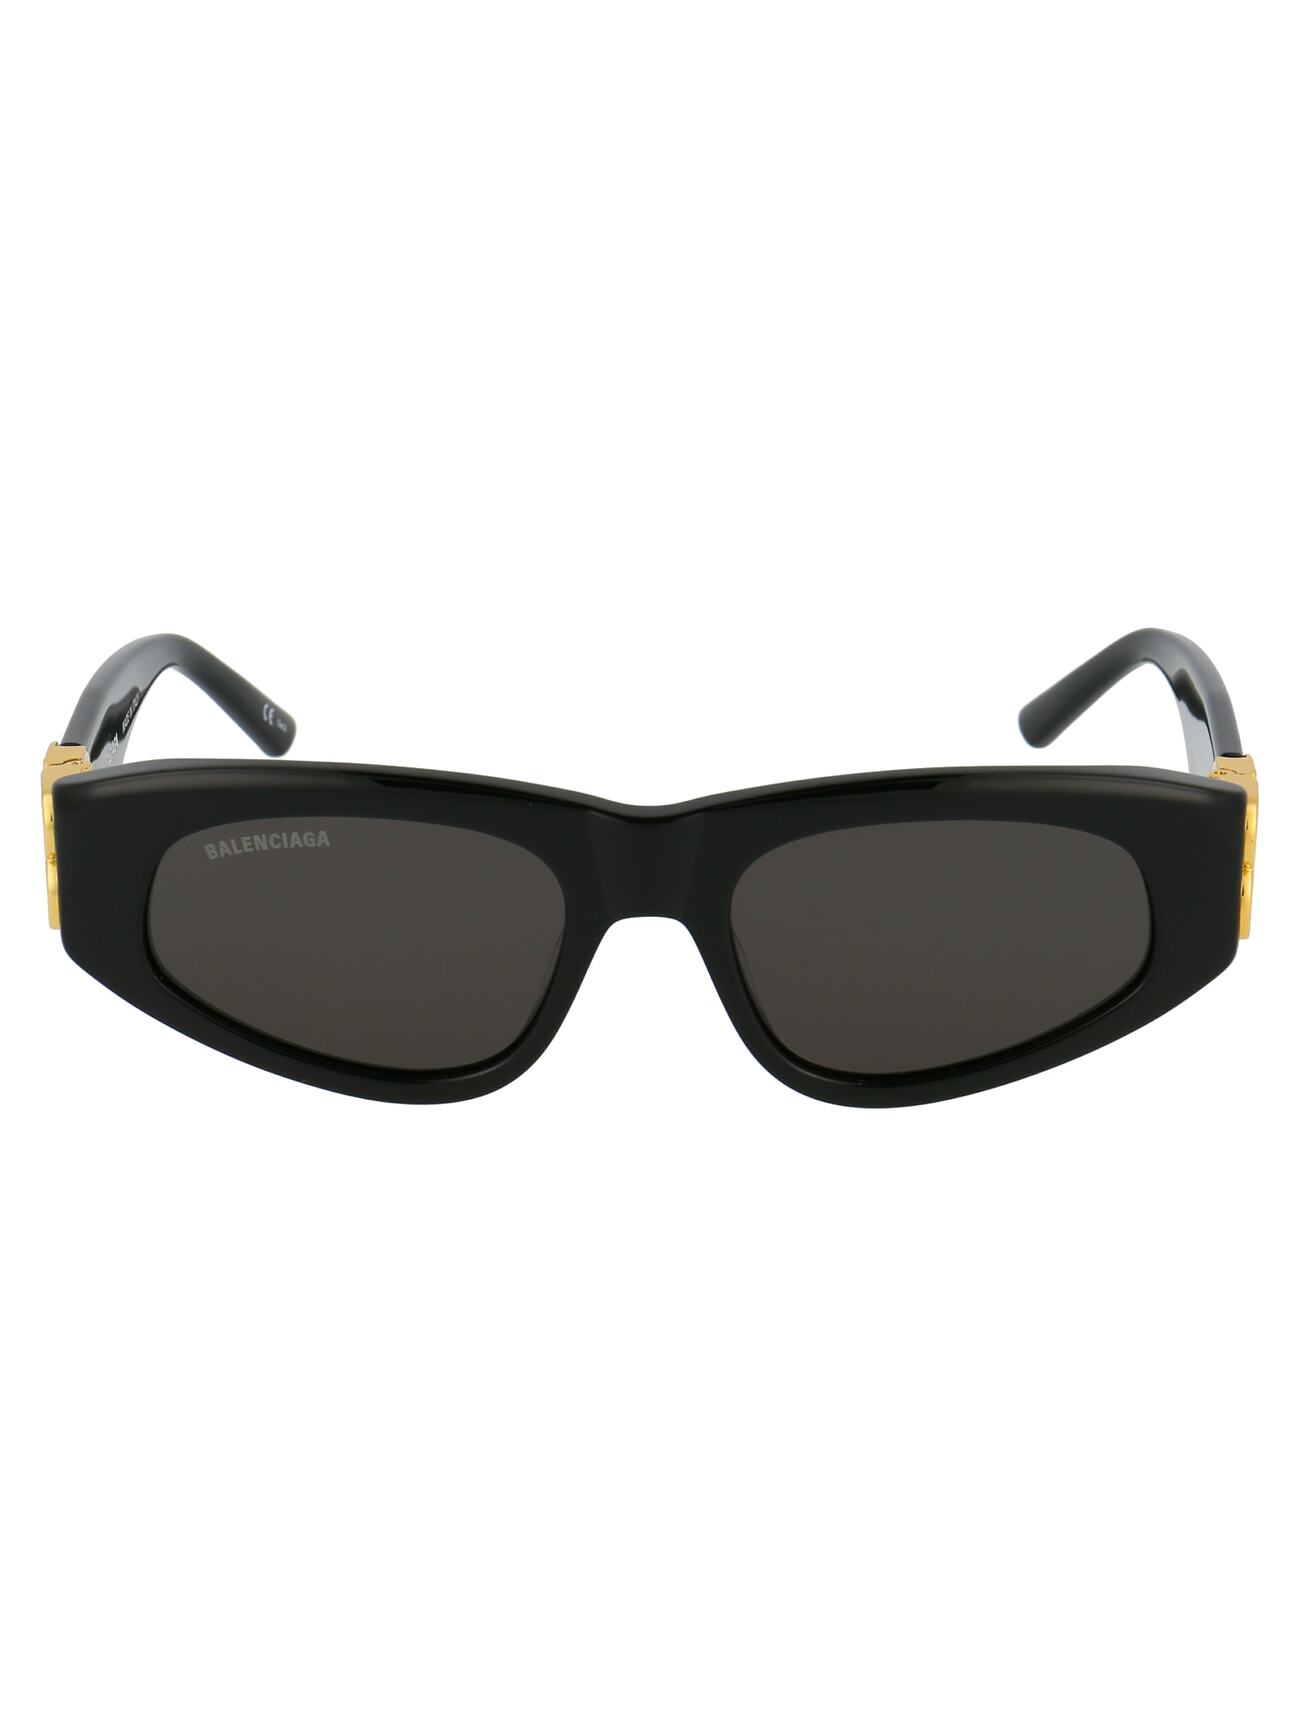 Balenciaga Eyewear Bb0095s Sunglasses in black / gold / grey